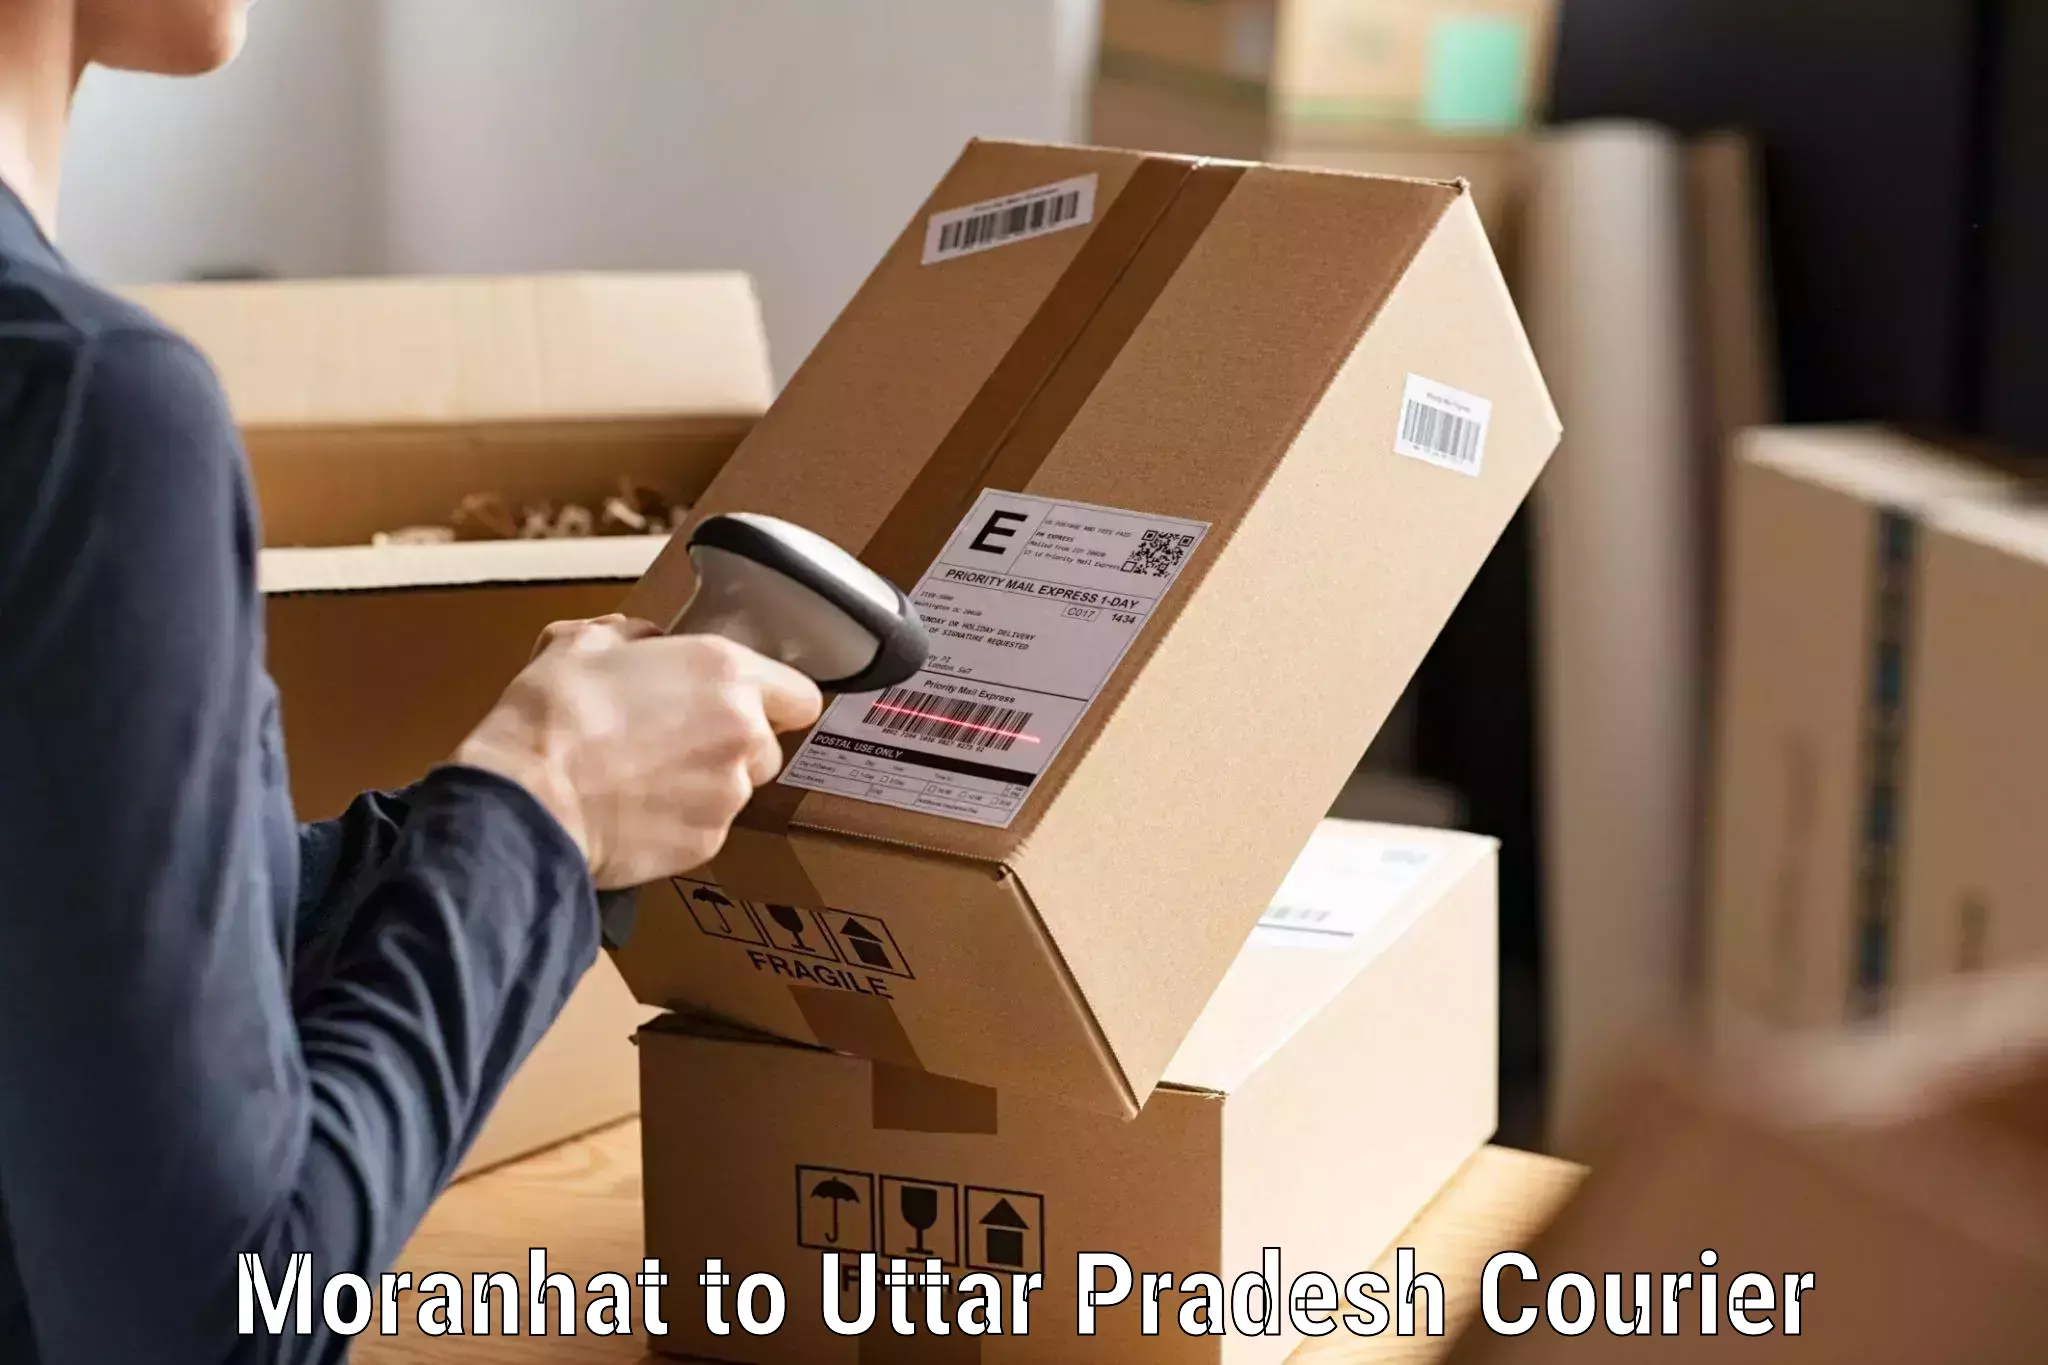 Efficient parcel tracking Moranhat to Sahatwar